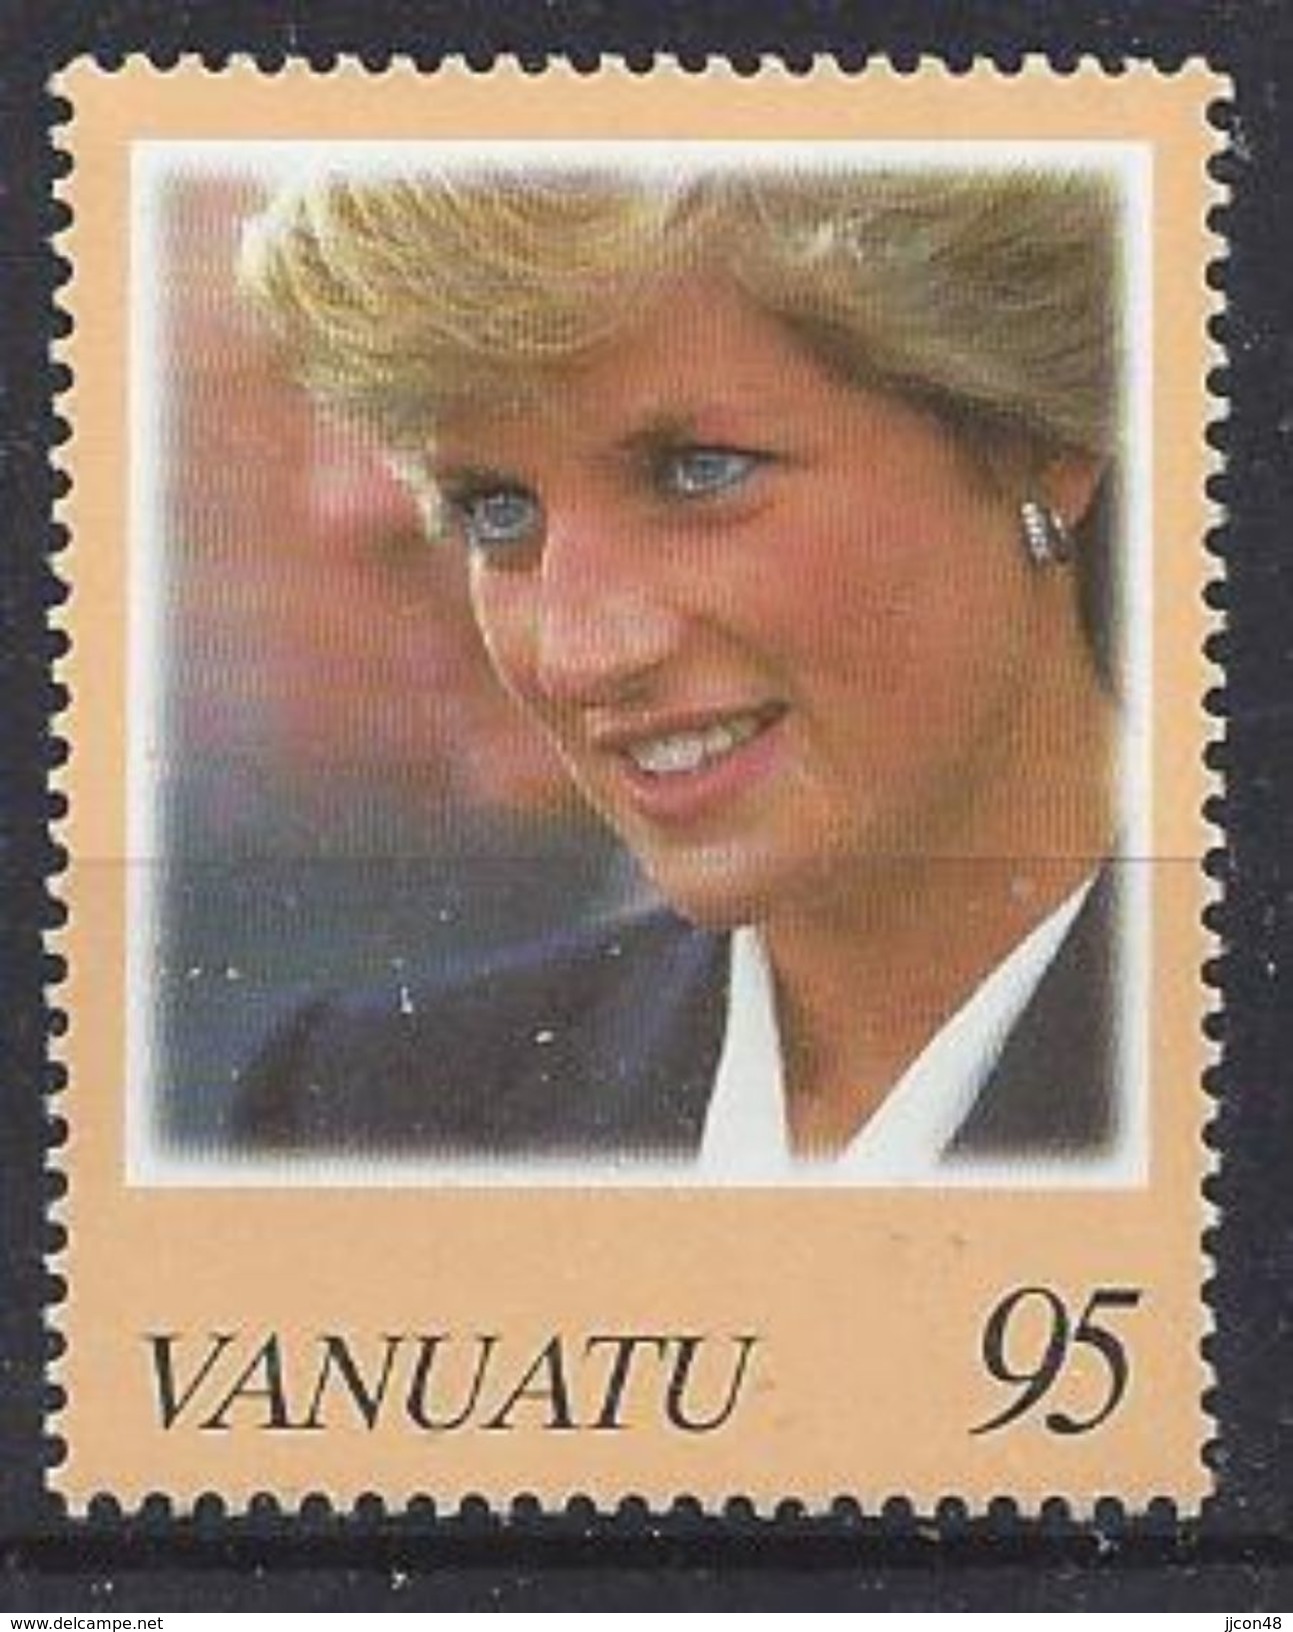 Vanuatu 1998  Princess Diana  (**) MNH - Vanuatu (1980-...)